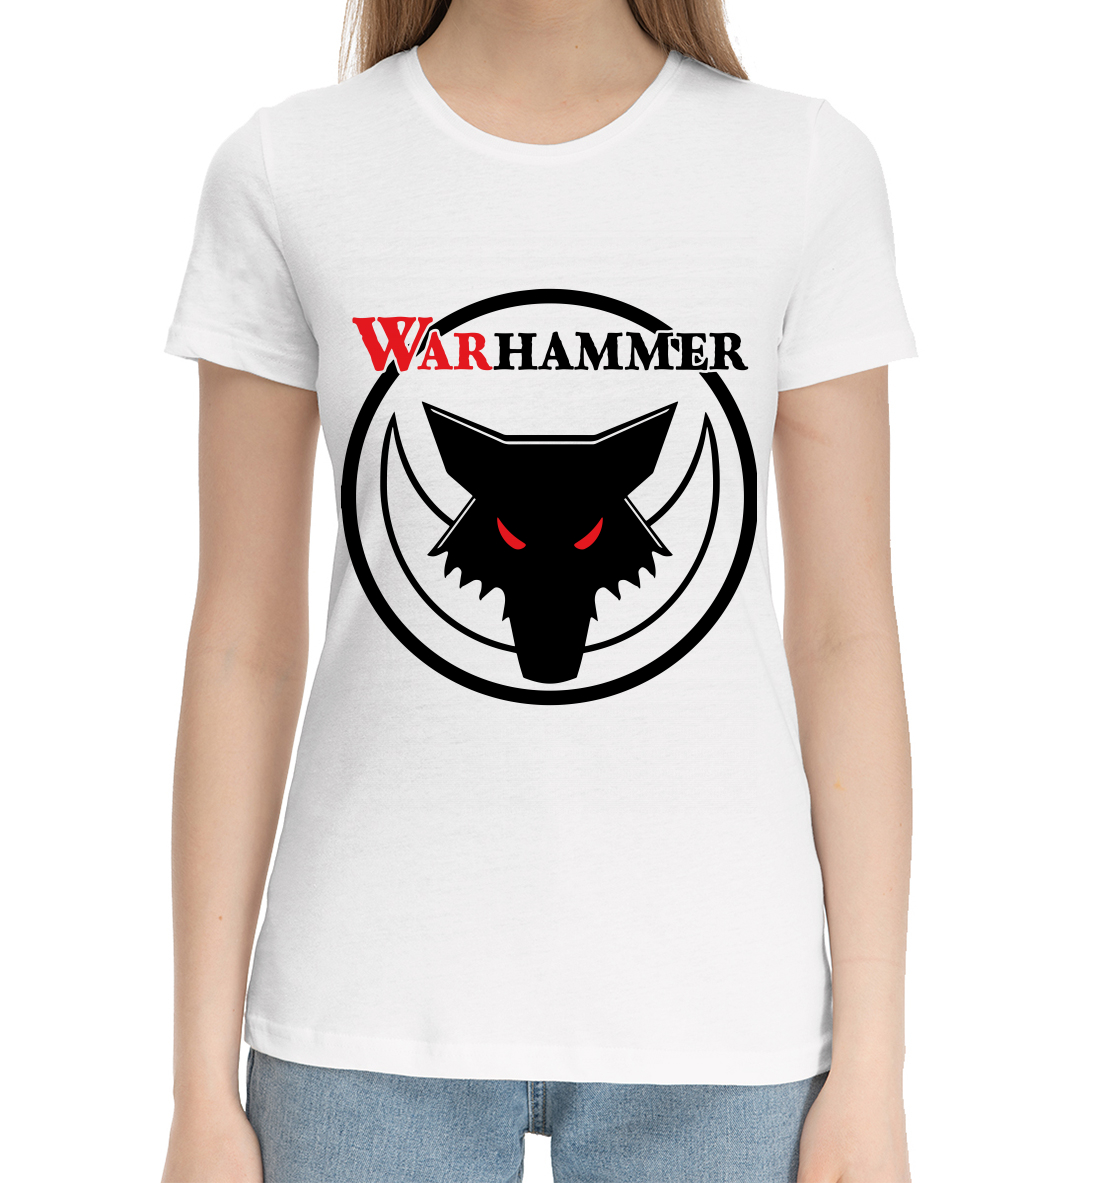 Женская Хлопковая футболка с принтом Warhammer, артикул WHR-248635-hfu-1mp